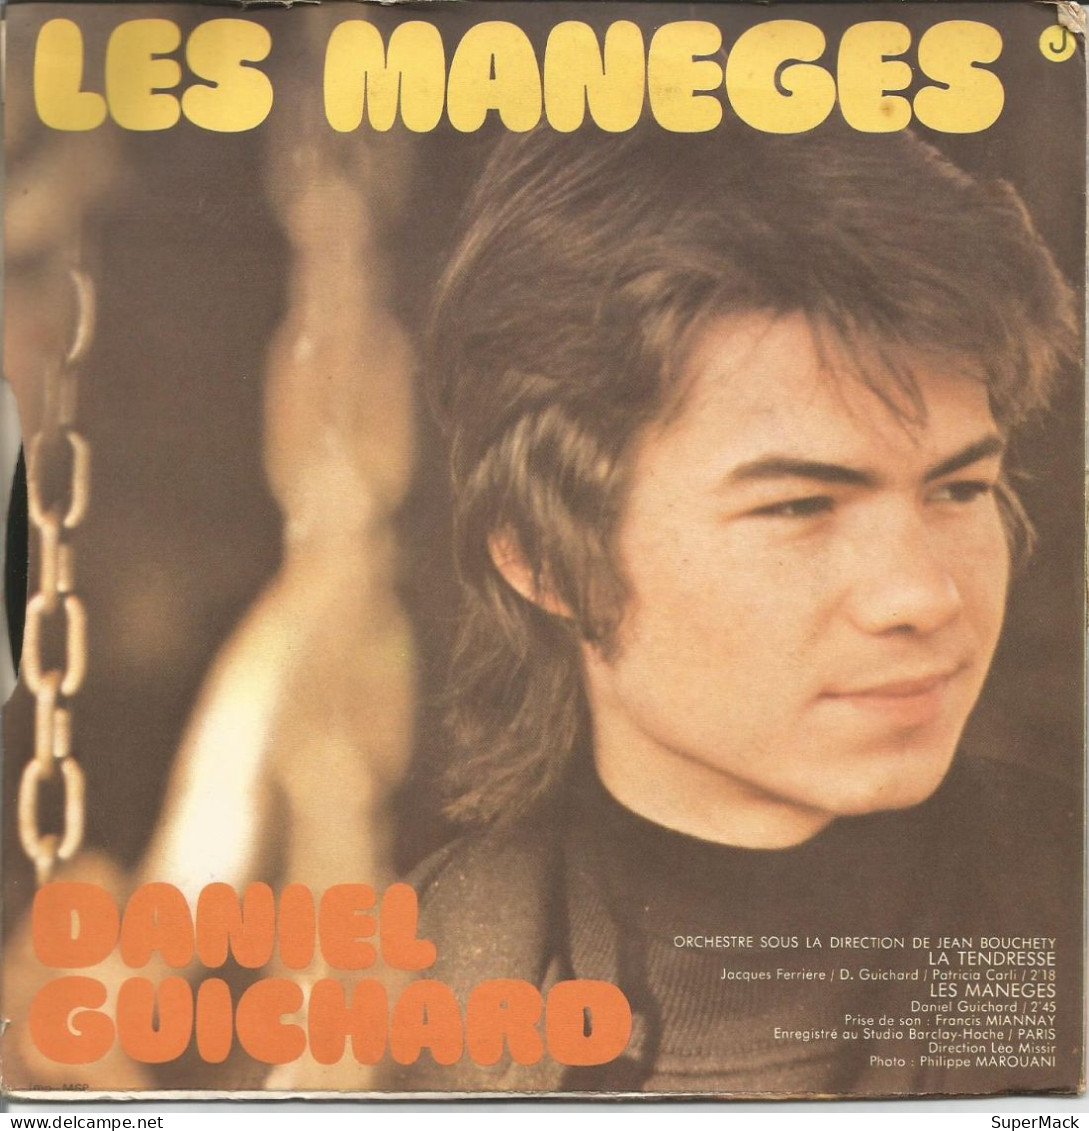 45T Daniel Guichard - La Tendresse - Barclay - 61.533 - France - 1972 - Verzameluitgaven